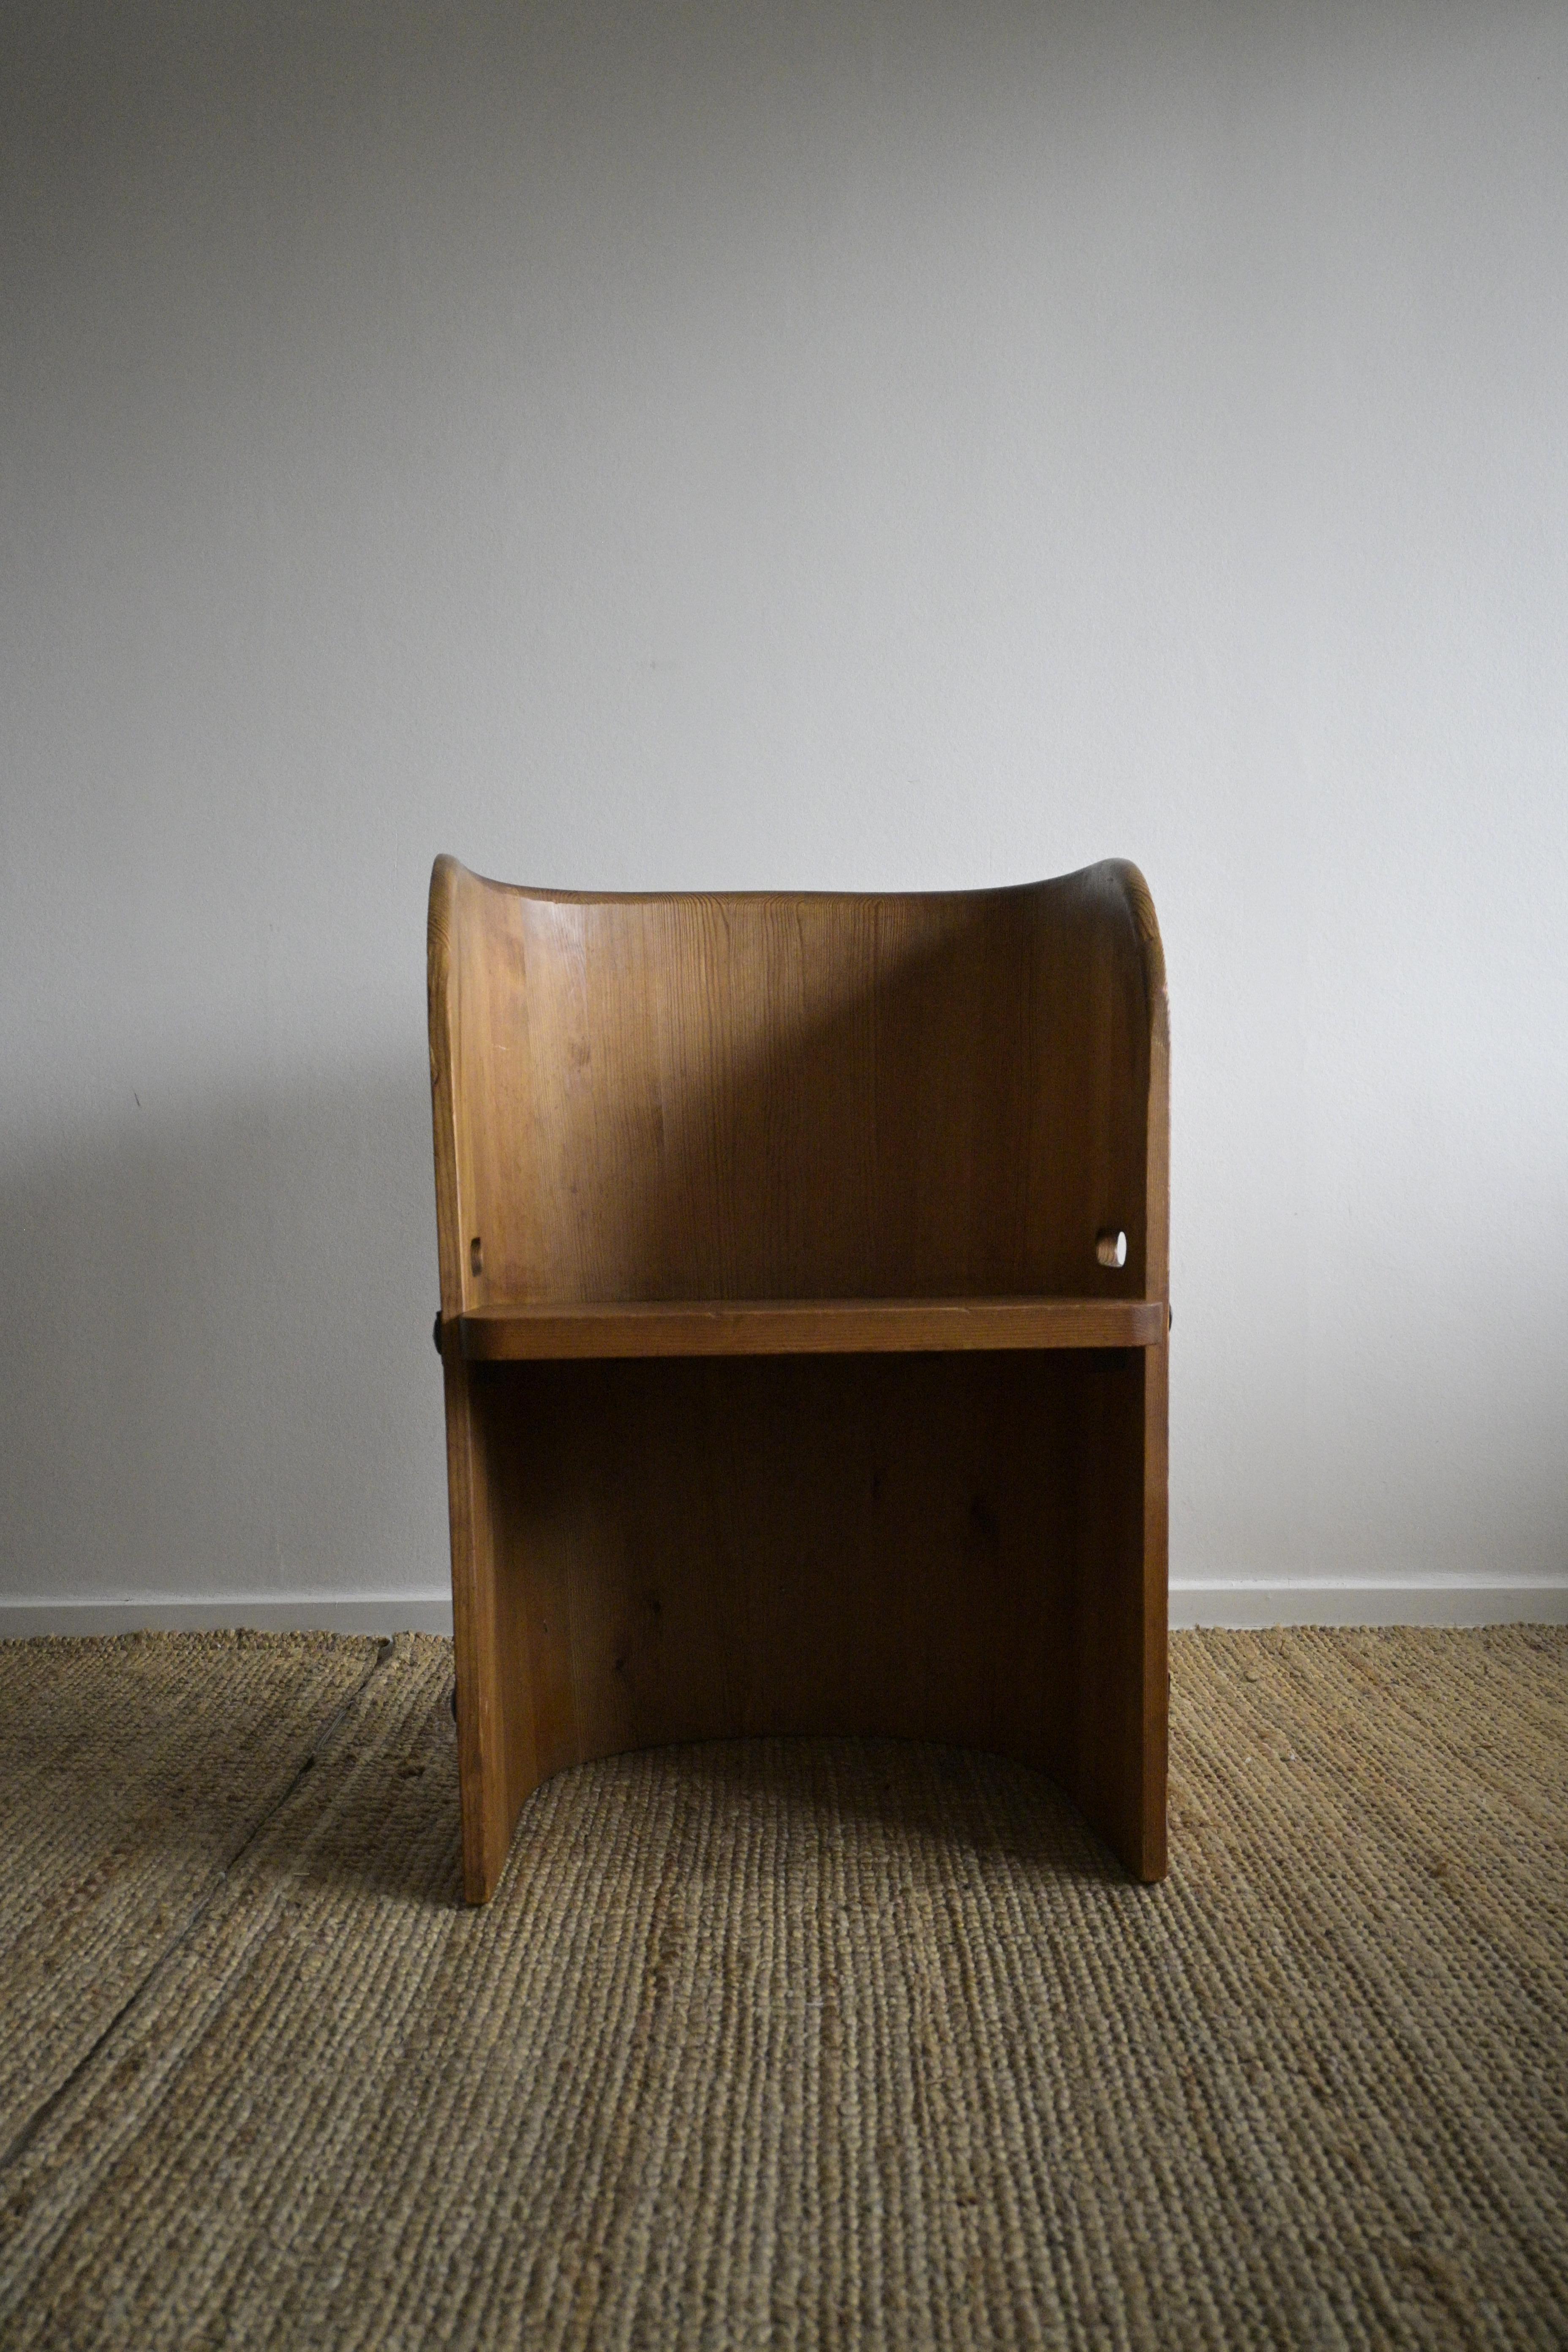 Iron Swedish pine chair produced by Åby Möbelfabrik, 1940s